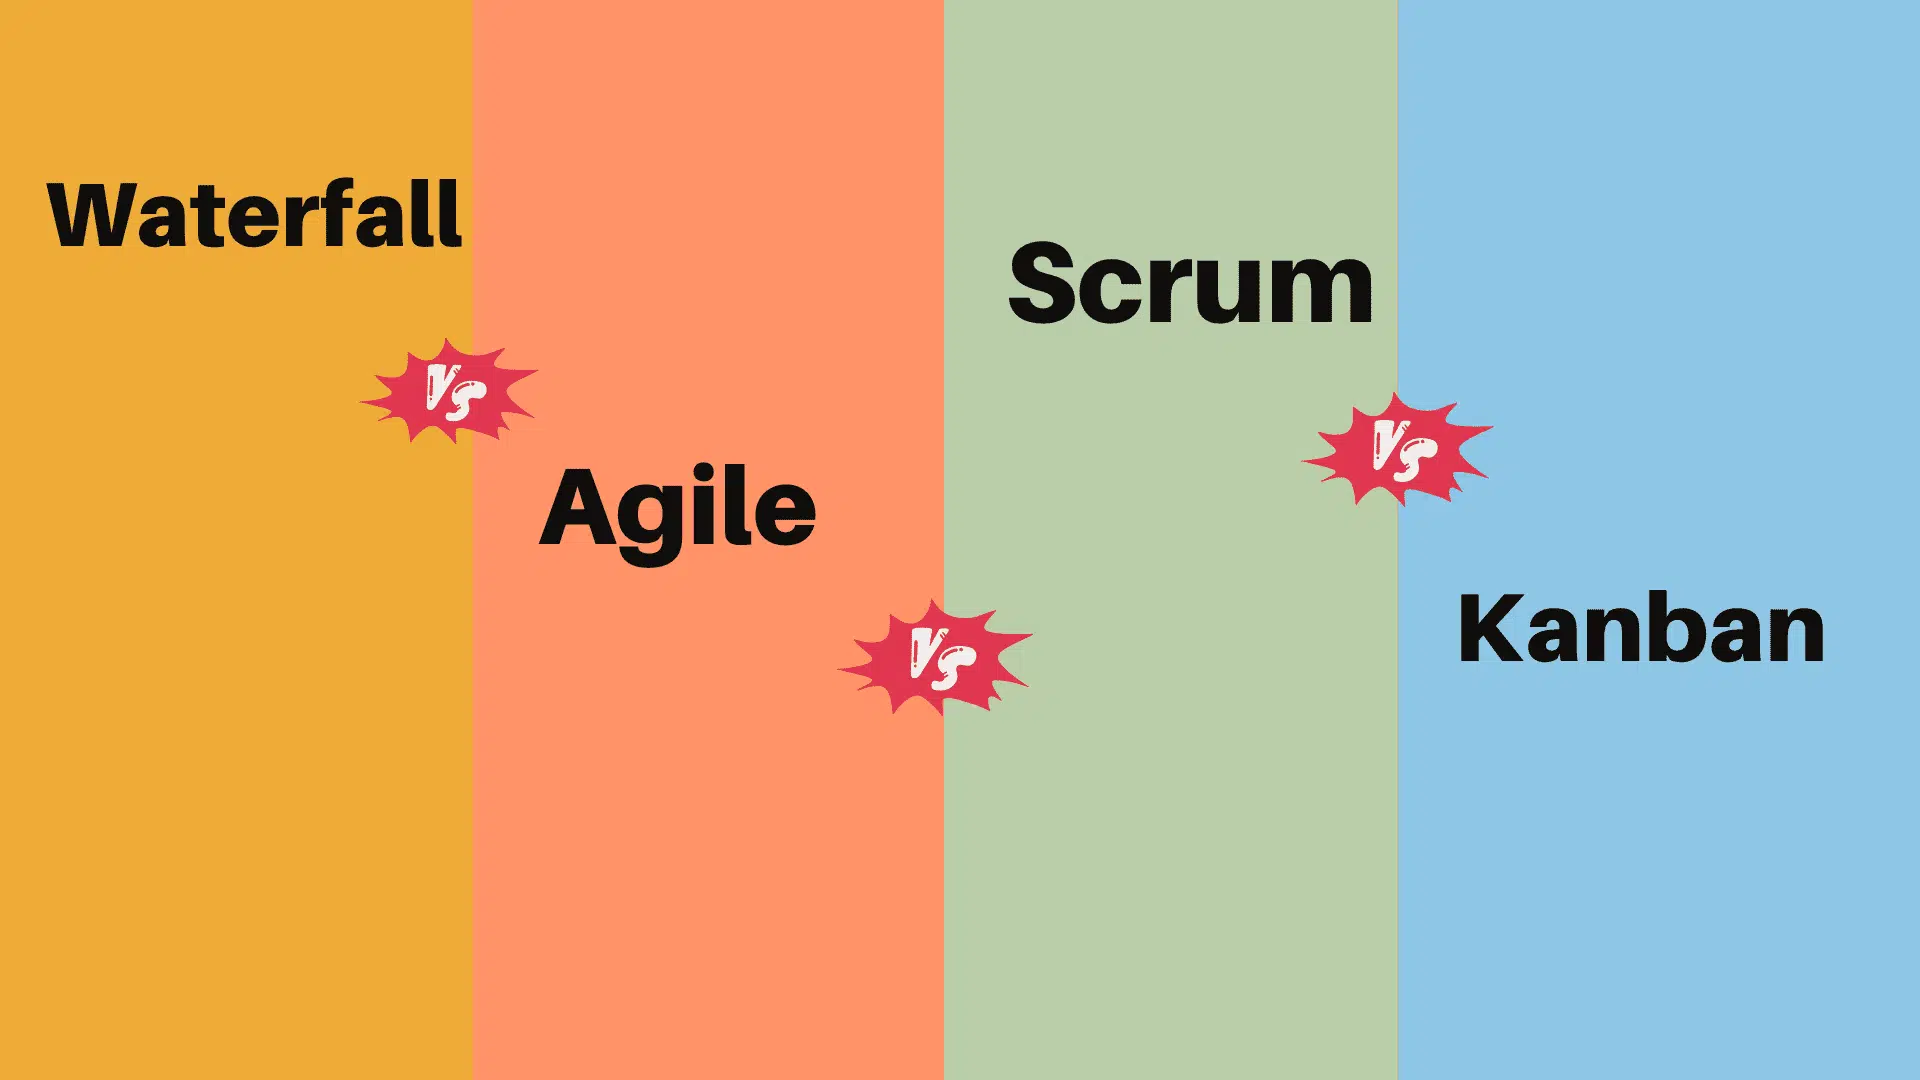 waterfall vs agile vs scrum vs kanban